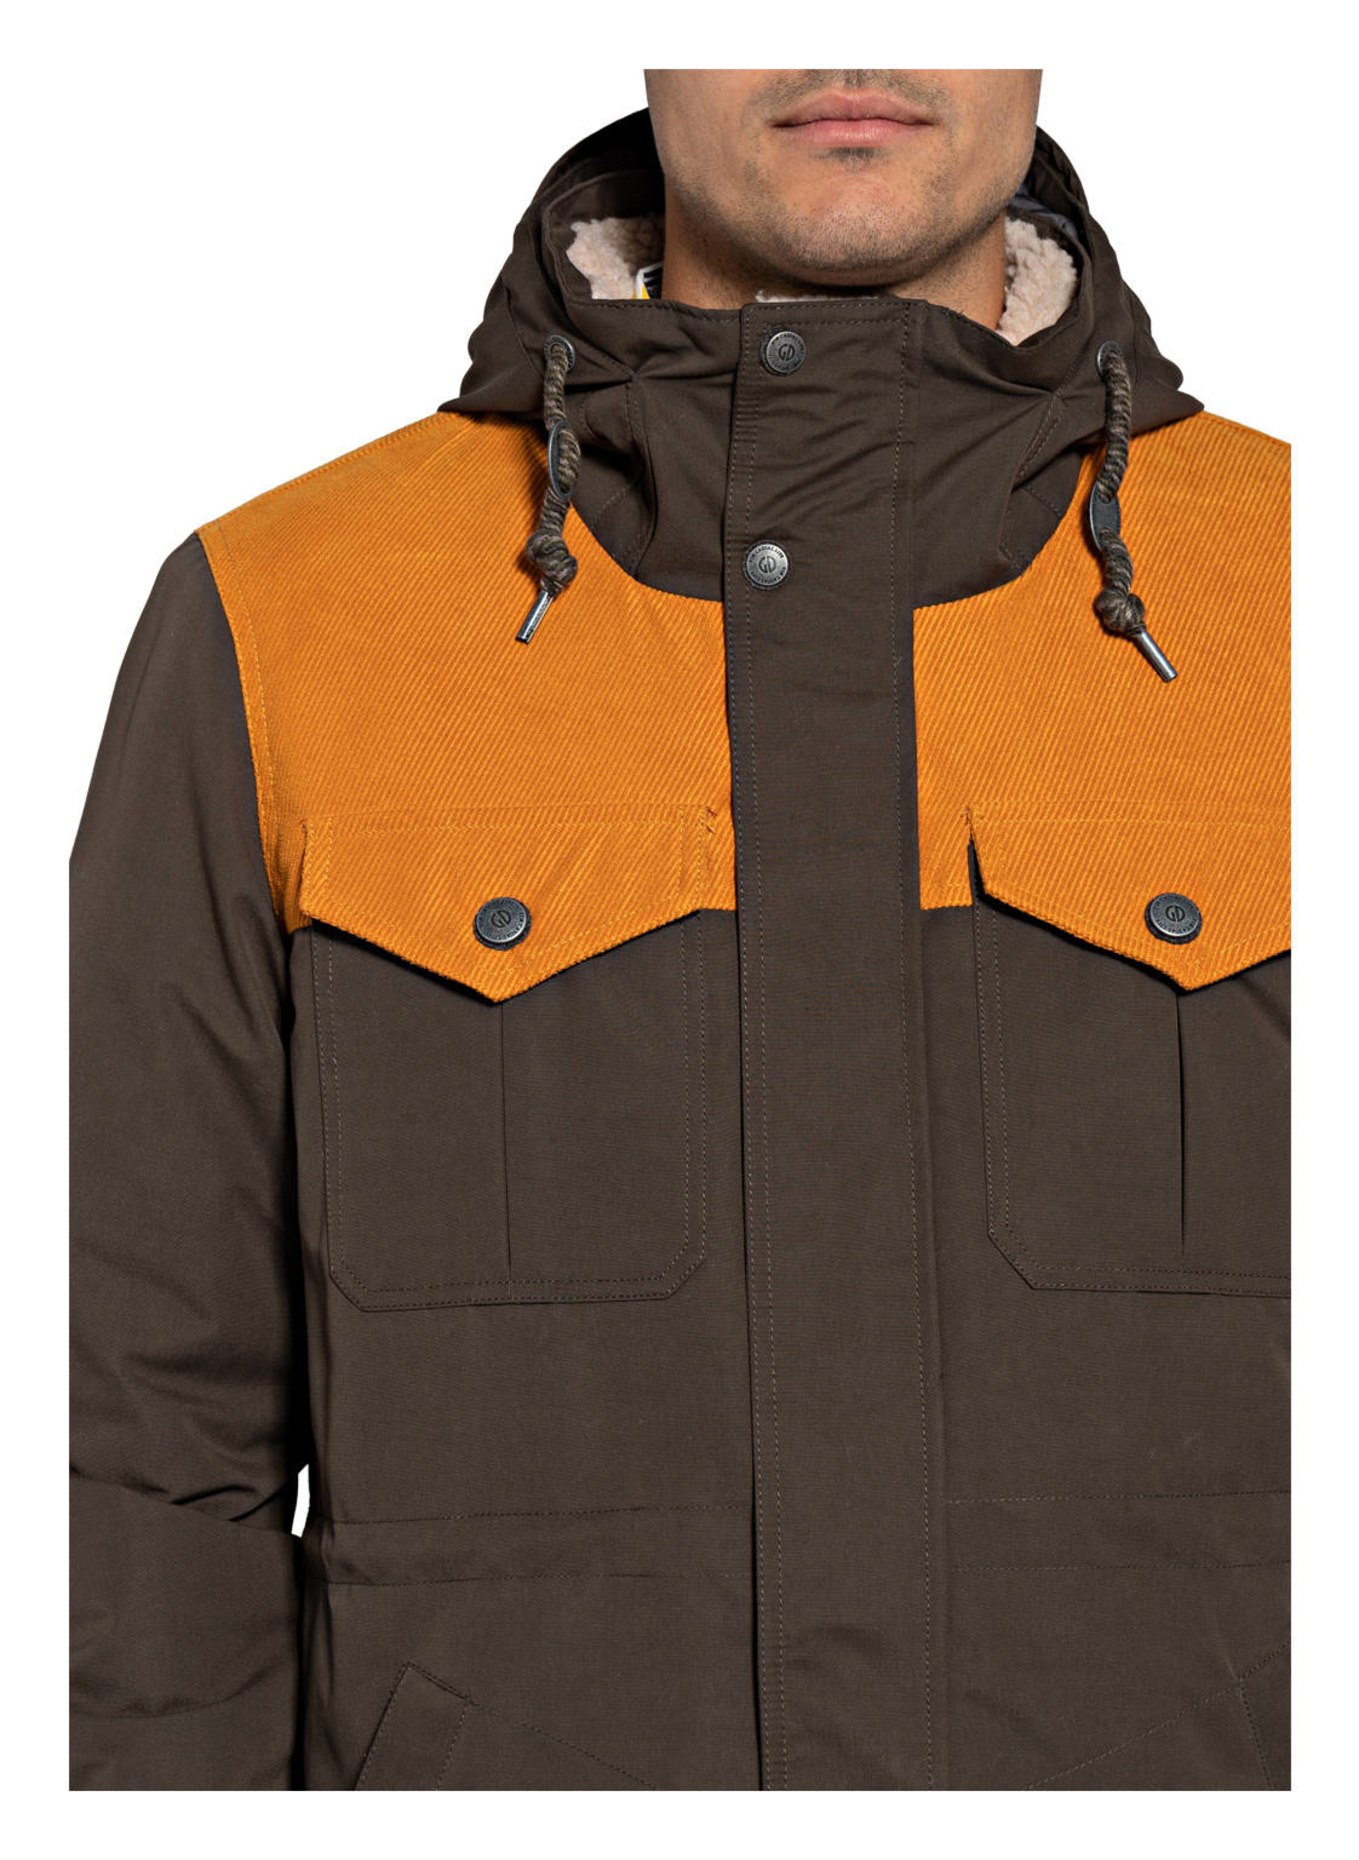 G.I.G.A. DX by Outdoor killtec in brown/ STORMIGA jacket orange dark